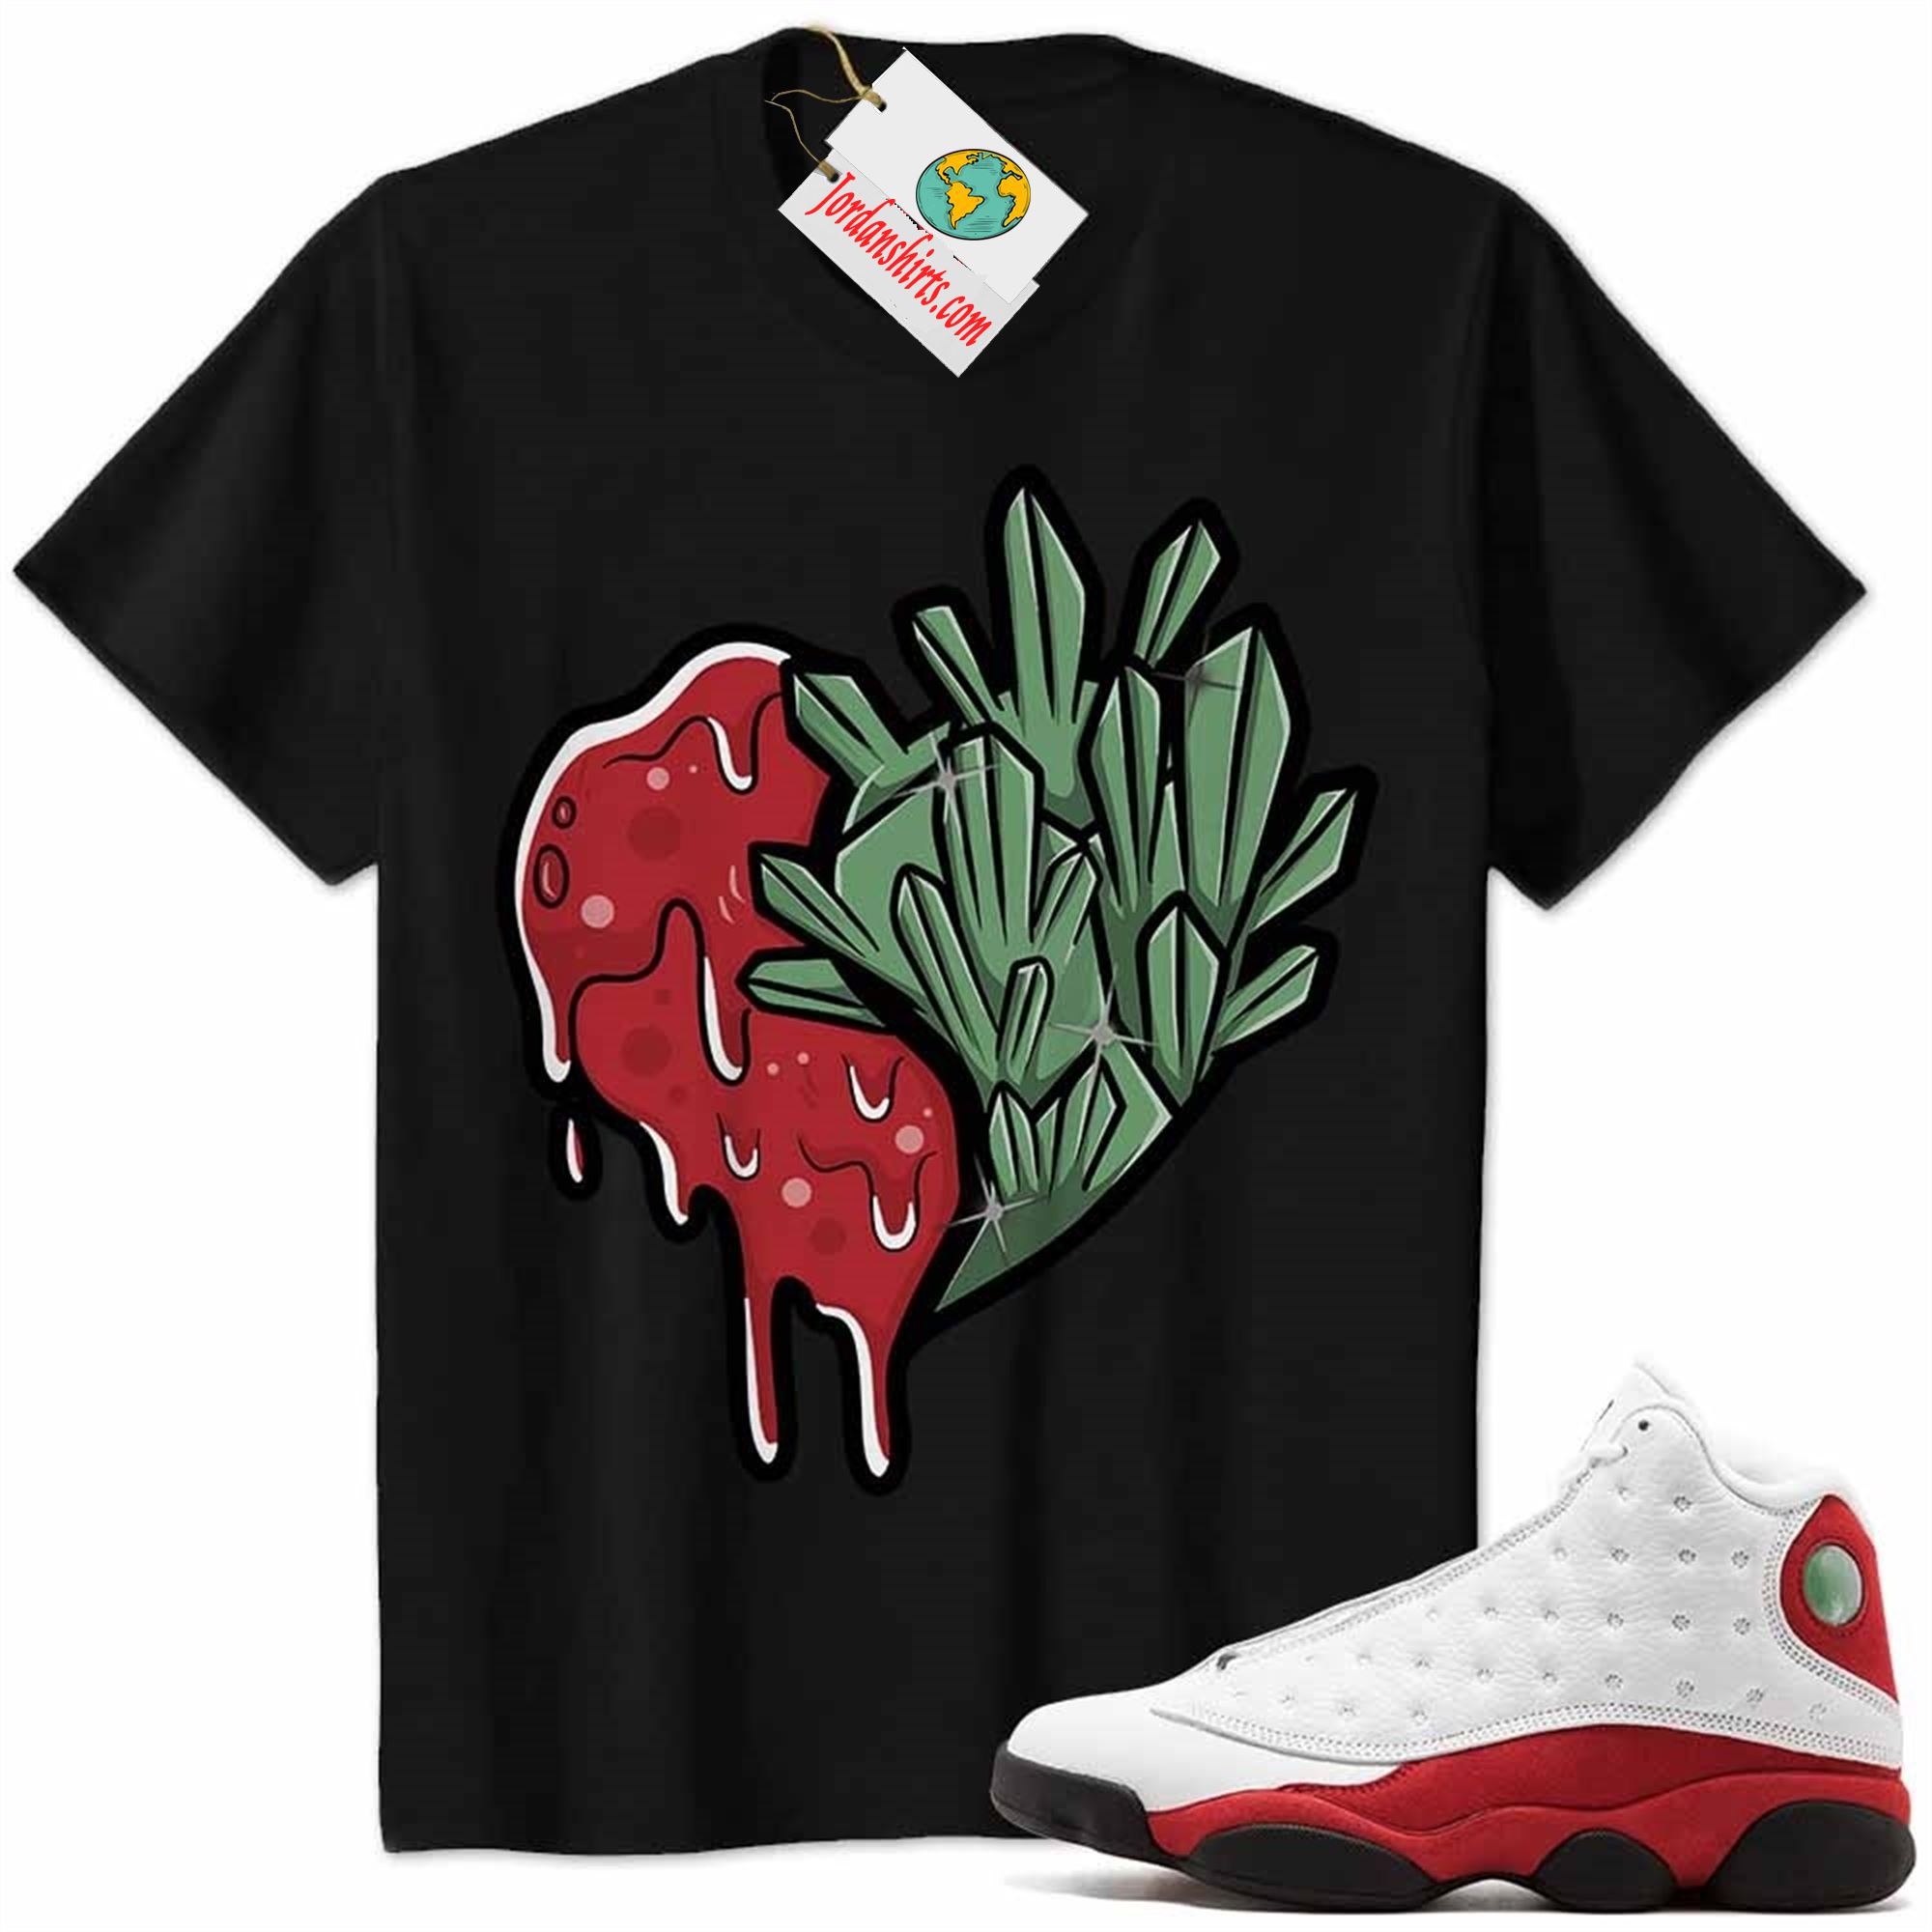 Jordan 13 Shirt, Crystal And Melt Heart Black Air Jordan 13 Chicago 13s Size Up To 5xl